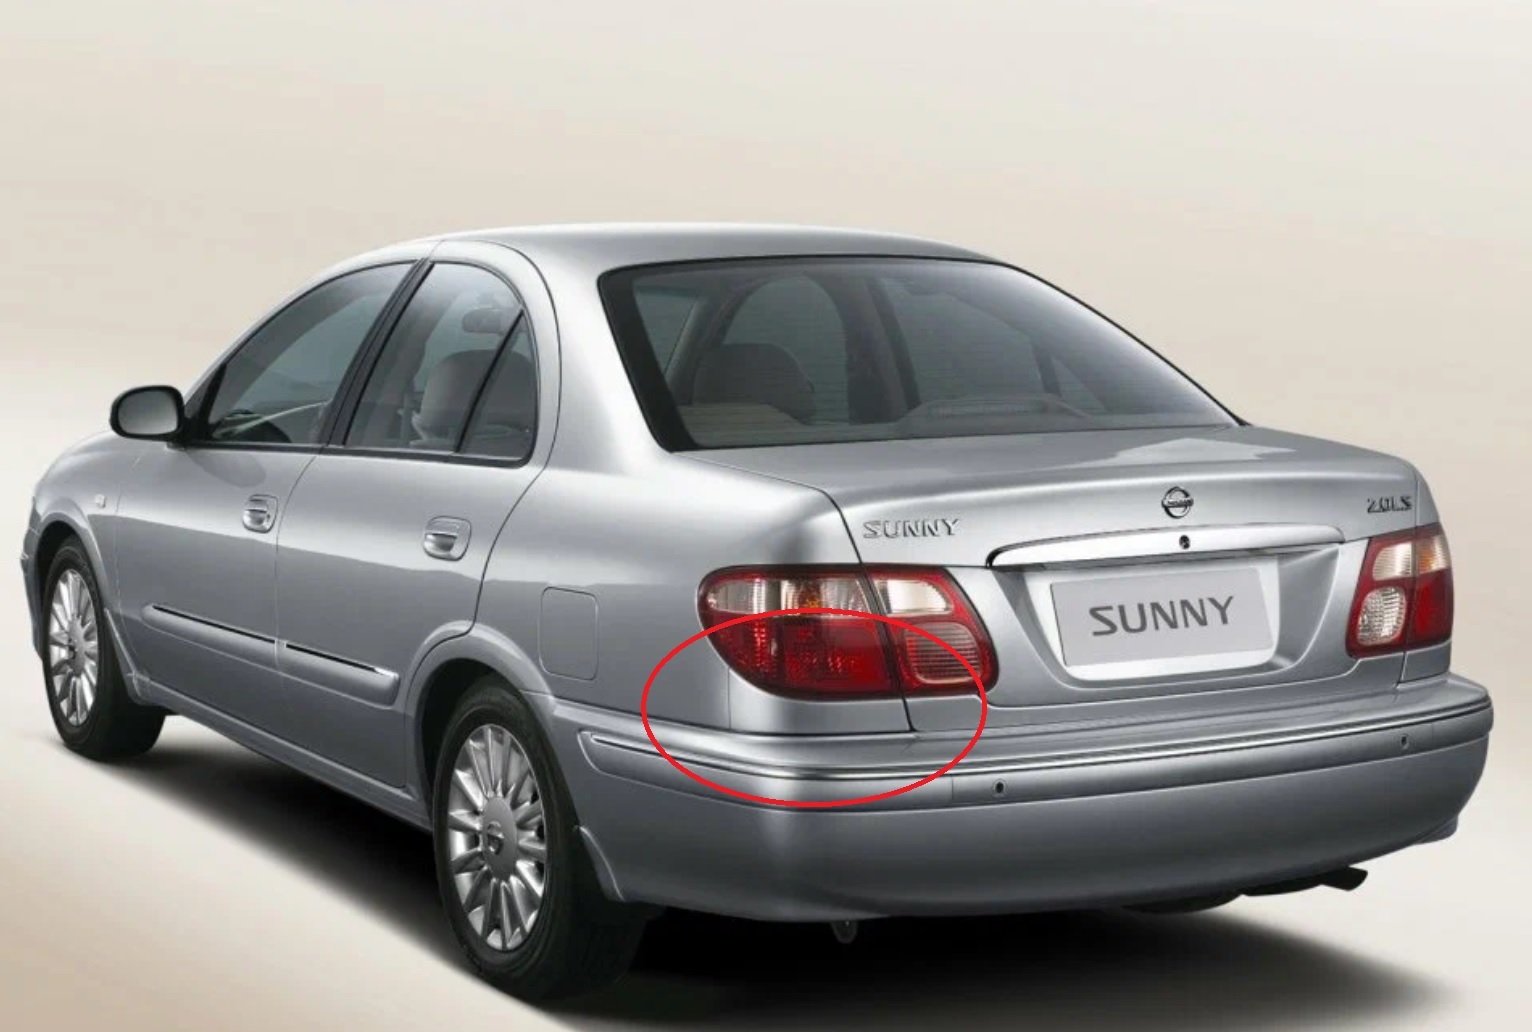 Ниссан силфи 2000 года. Ниссан Санни n16. Nissan Sunny 2000. Nissan Sunny 1998. Nissan Sunny 2009.